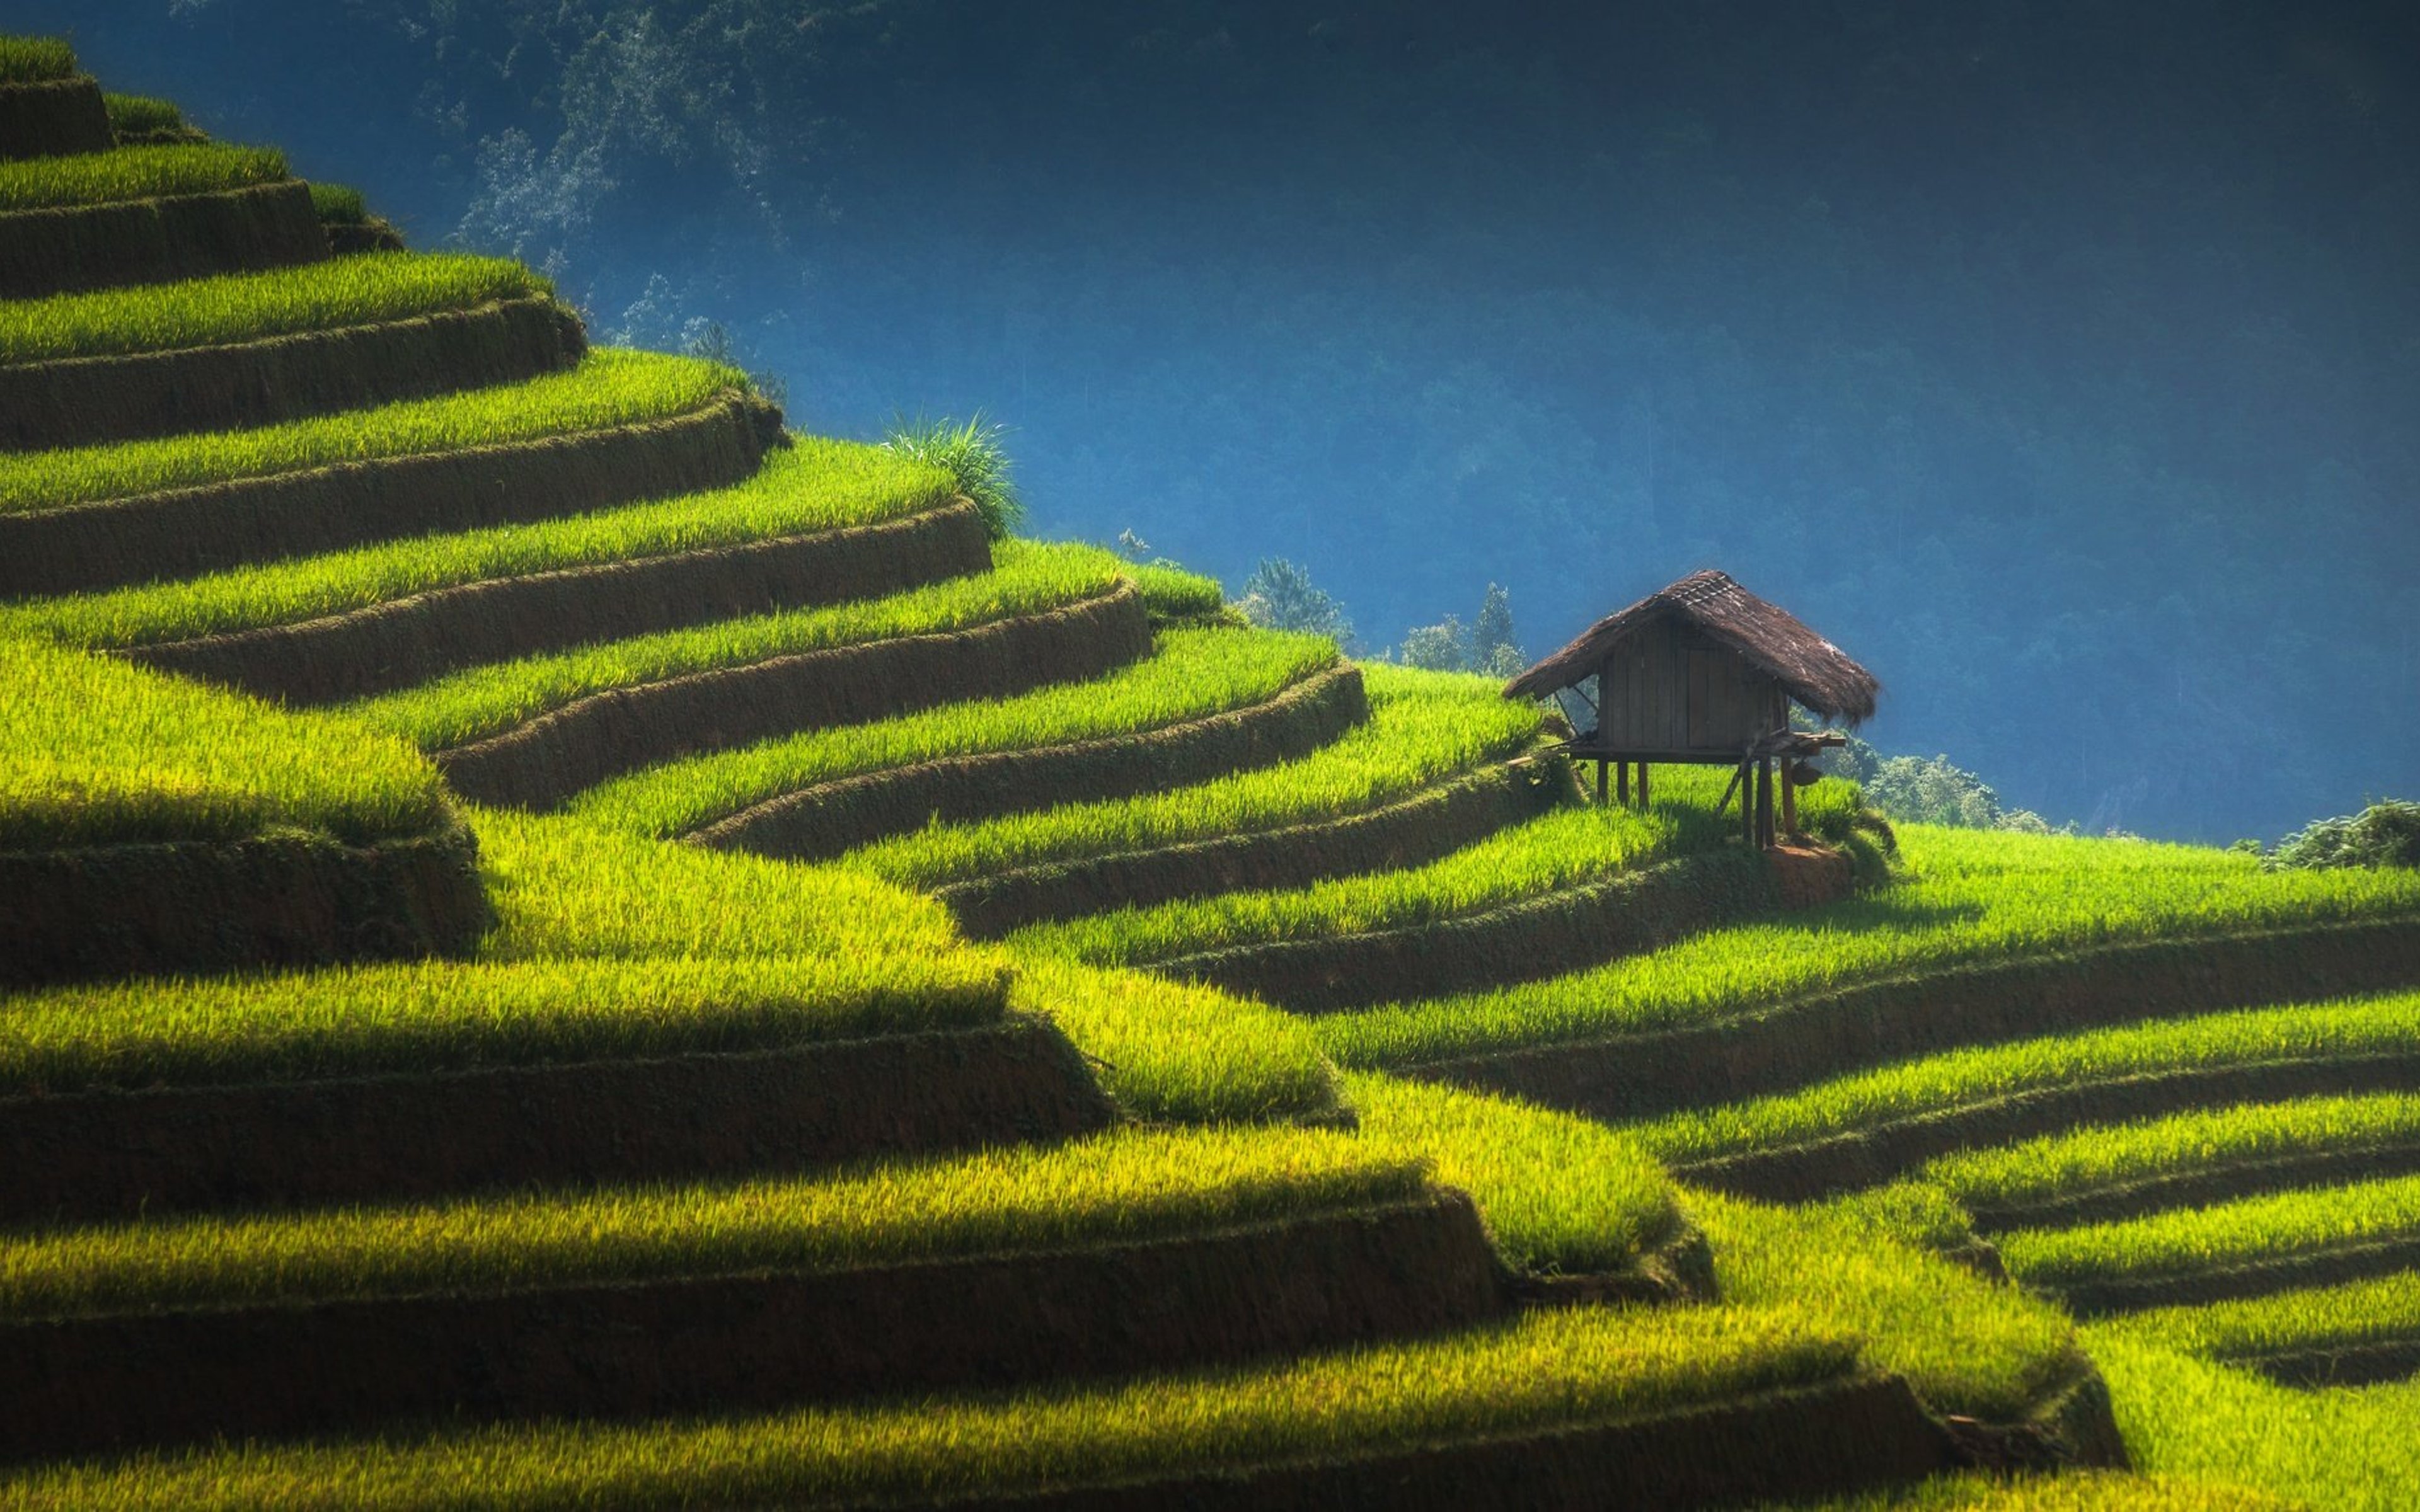 Home on terraced rice field in Vietnam